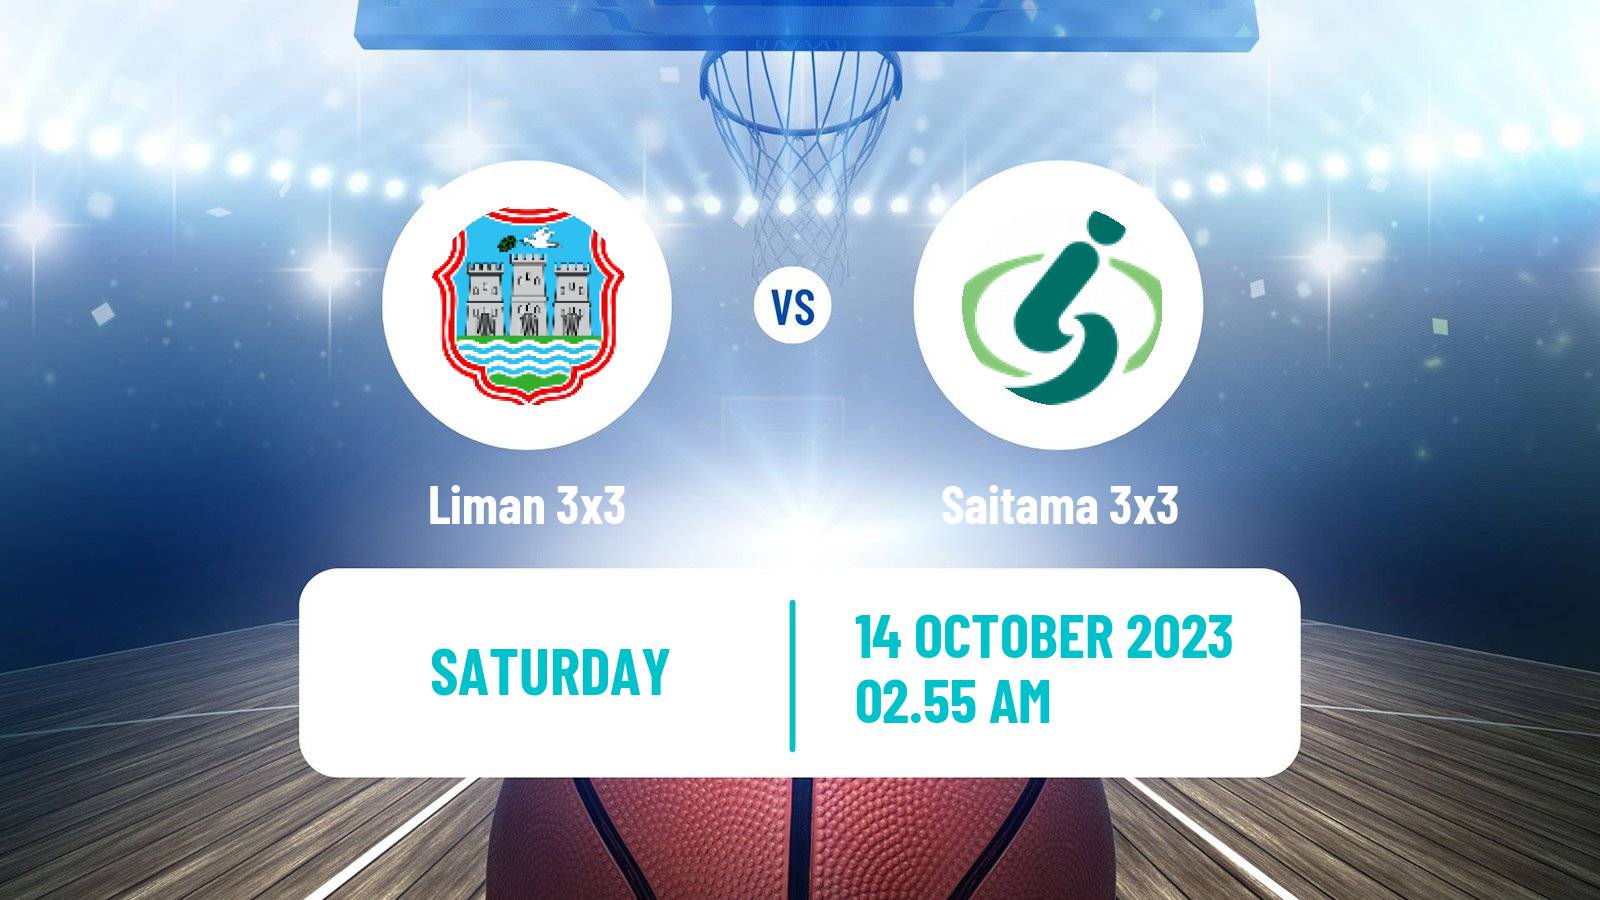 Basketball World Tour Shanghai 3x3 Liman 3x3 - Saitama 3x3